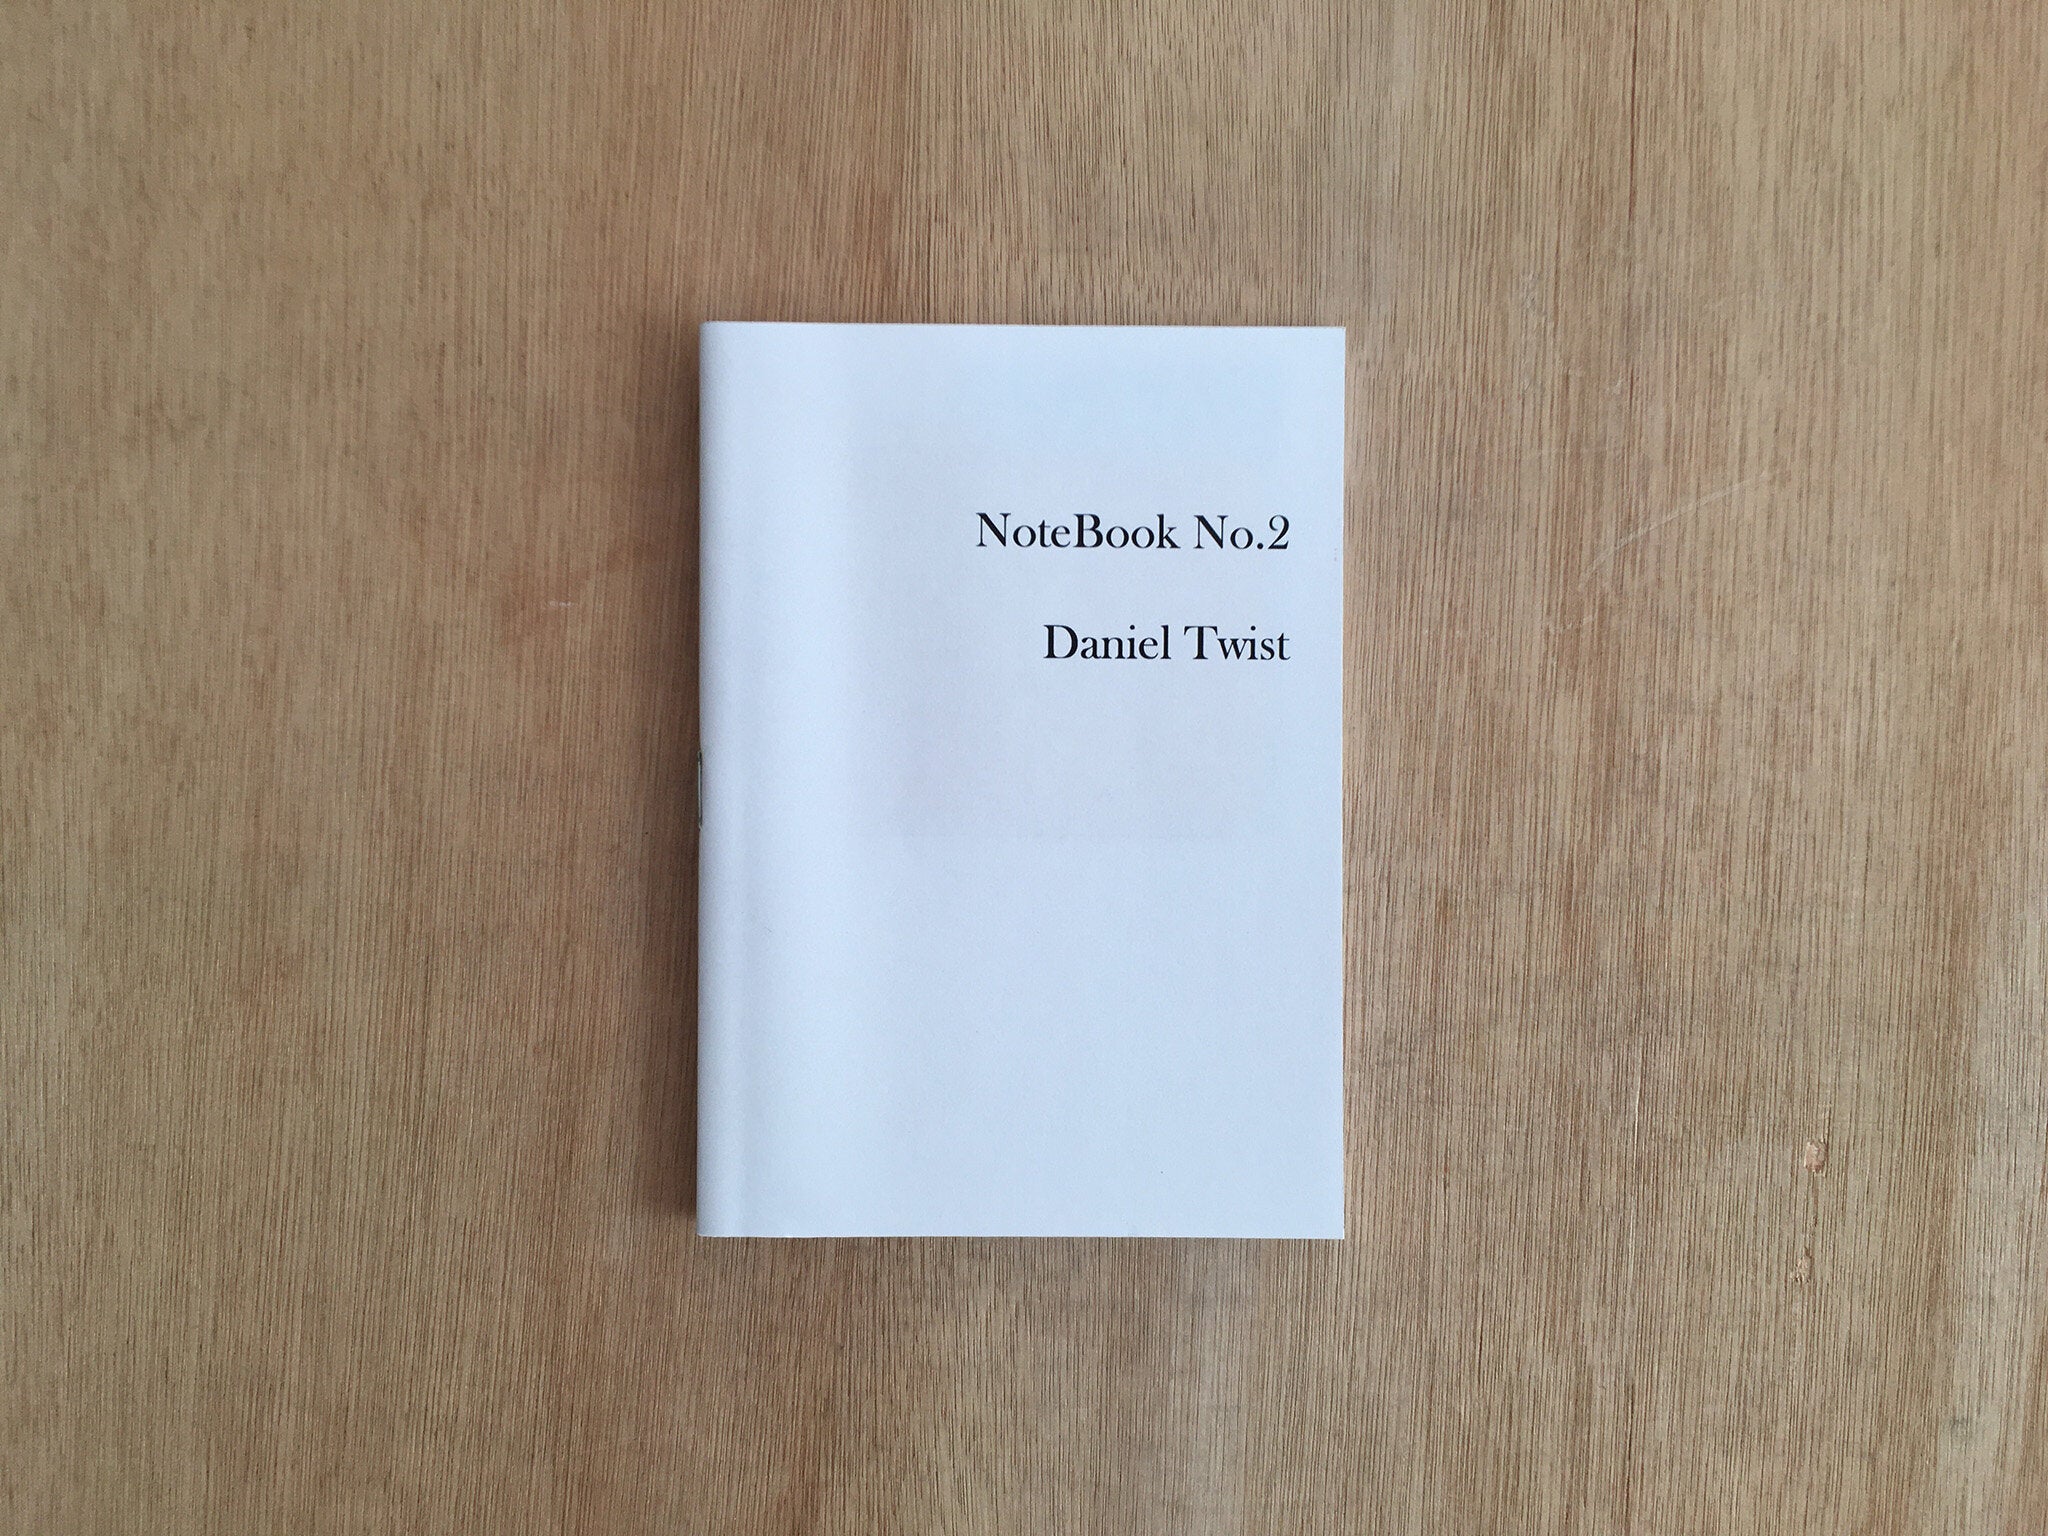 NOTEBOOK NO. 2 by Daniel Twist